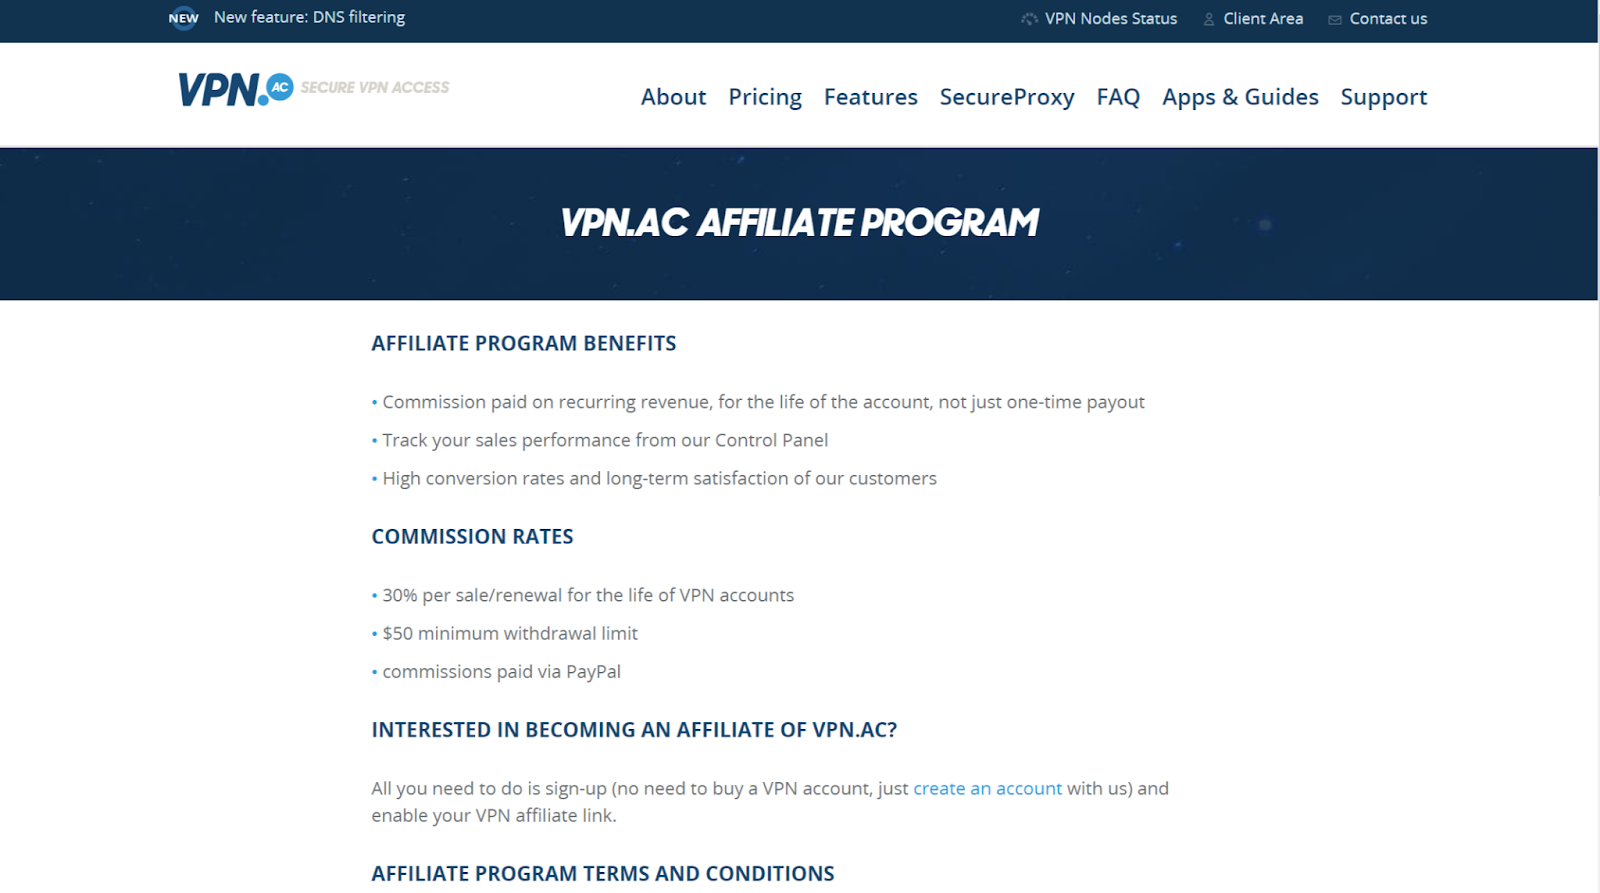 VPN.ac Affiliate Program home page